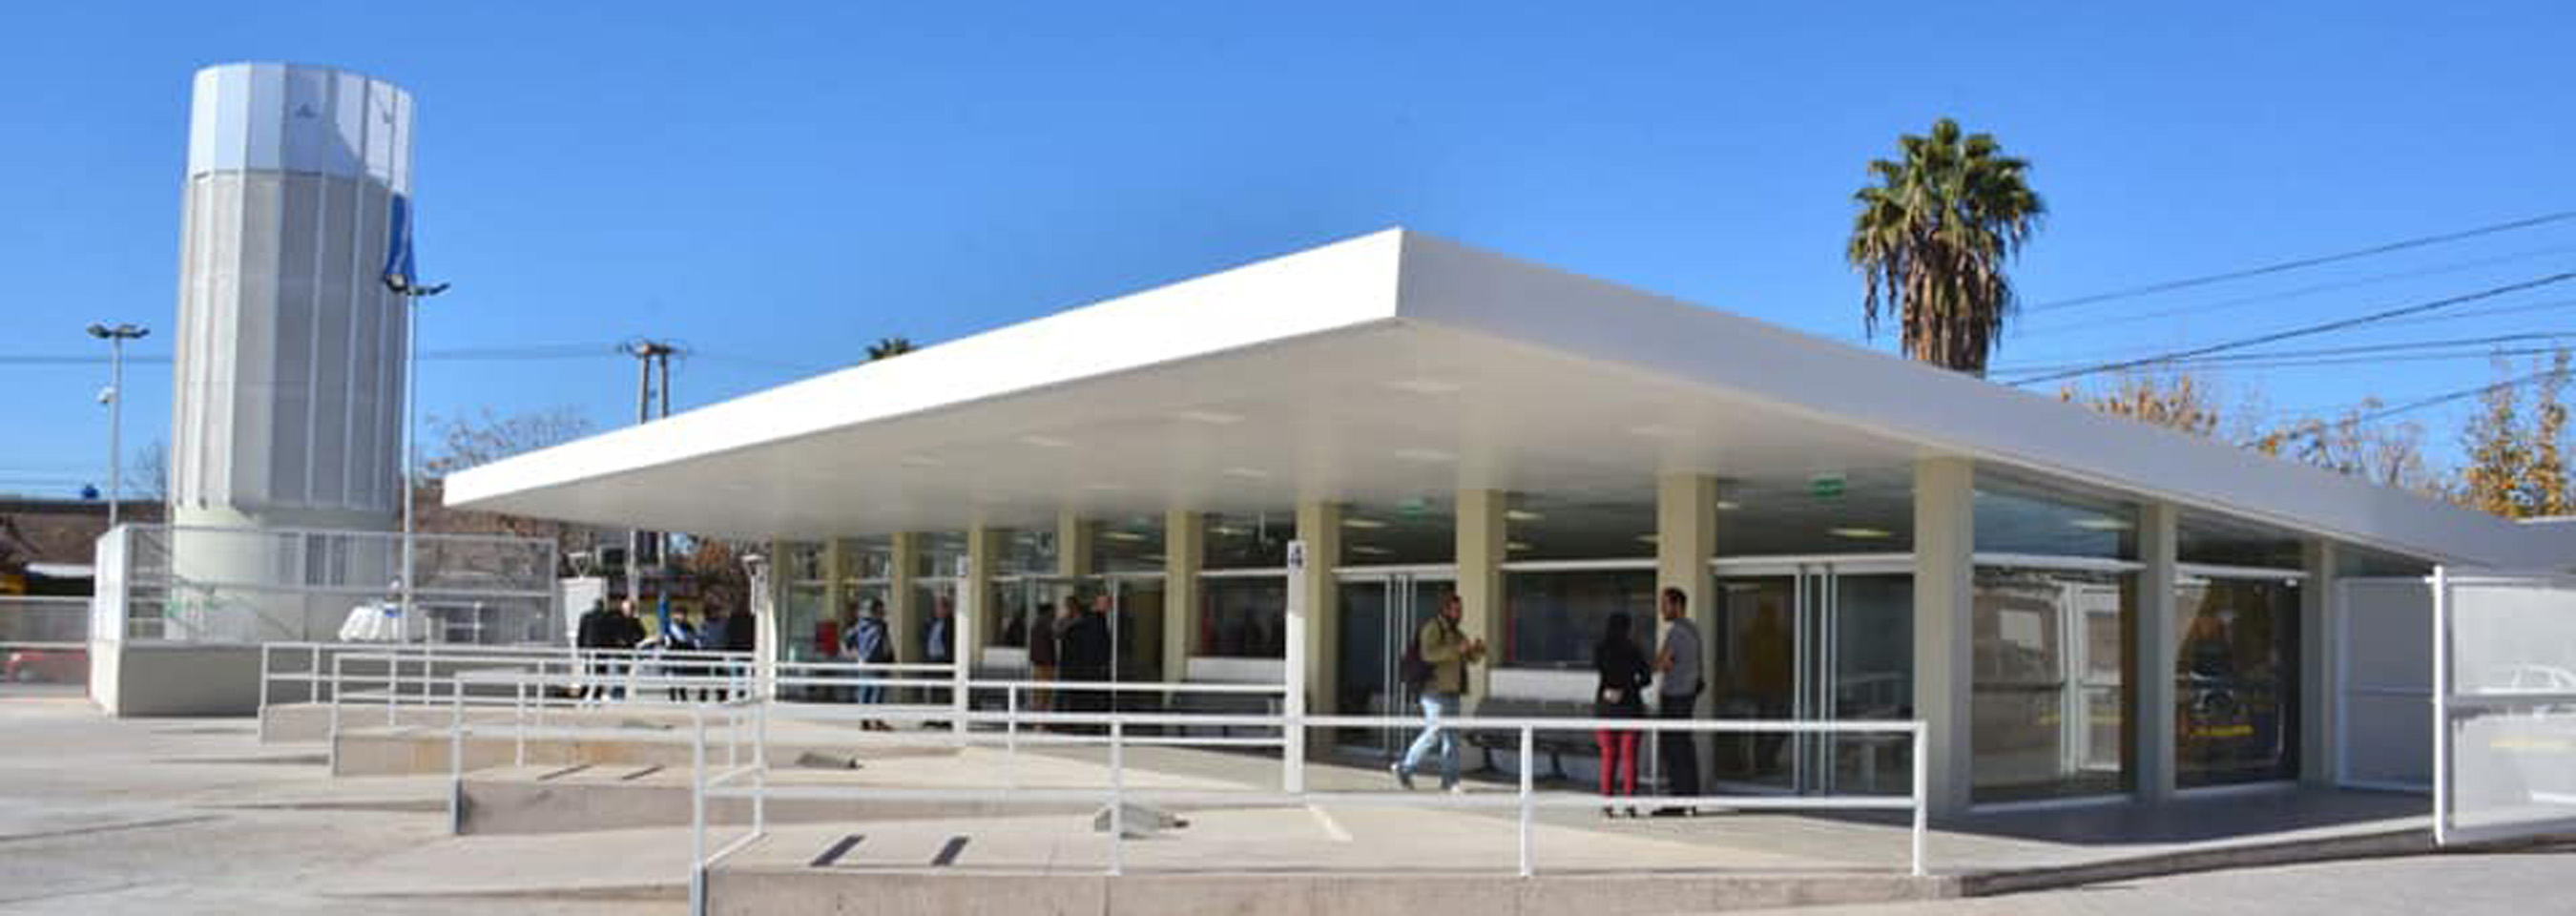 La Terminal de Ómnibus abrió sus puertas